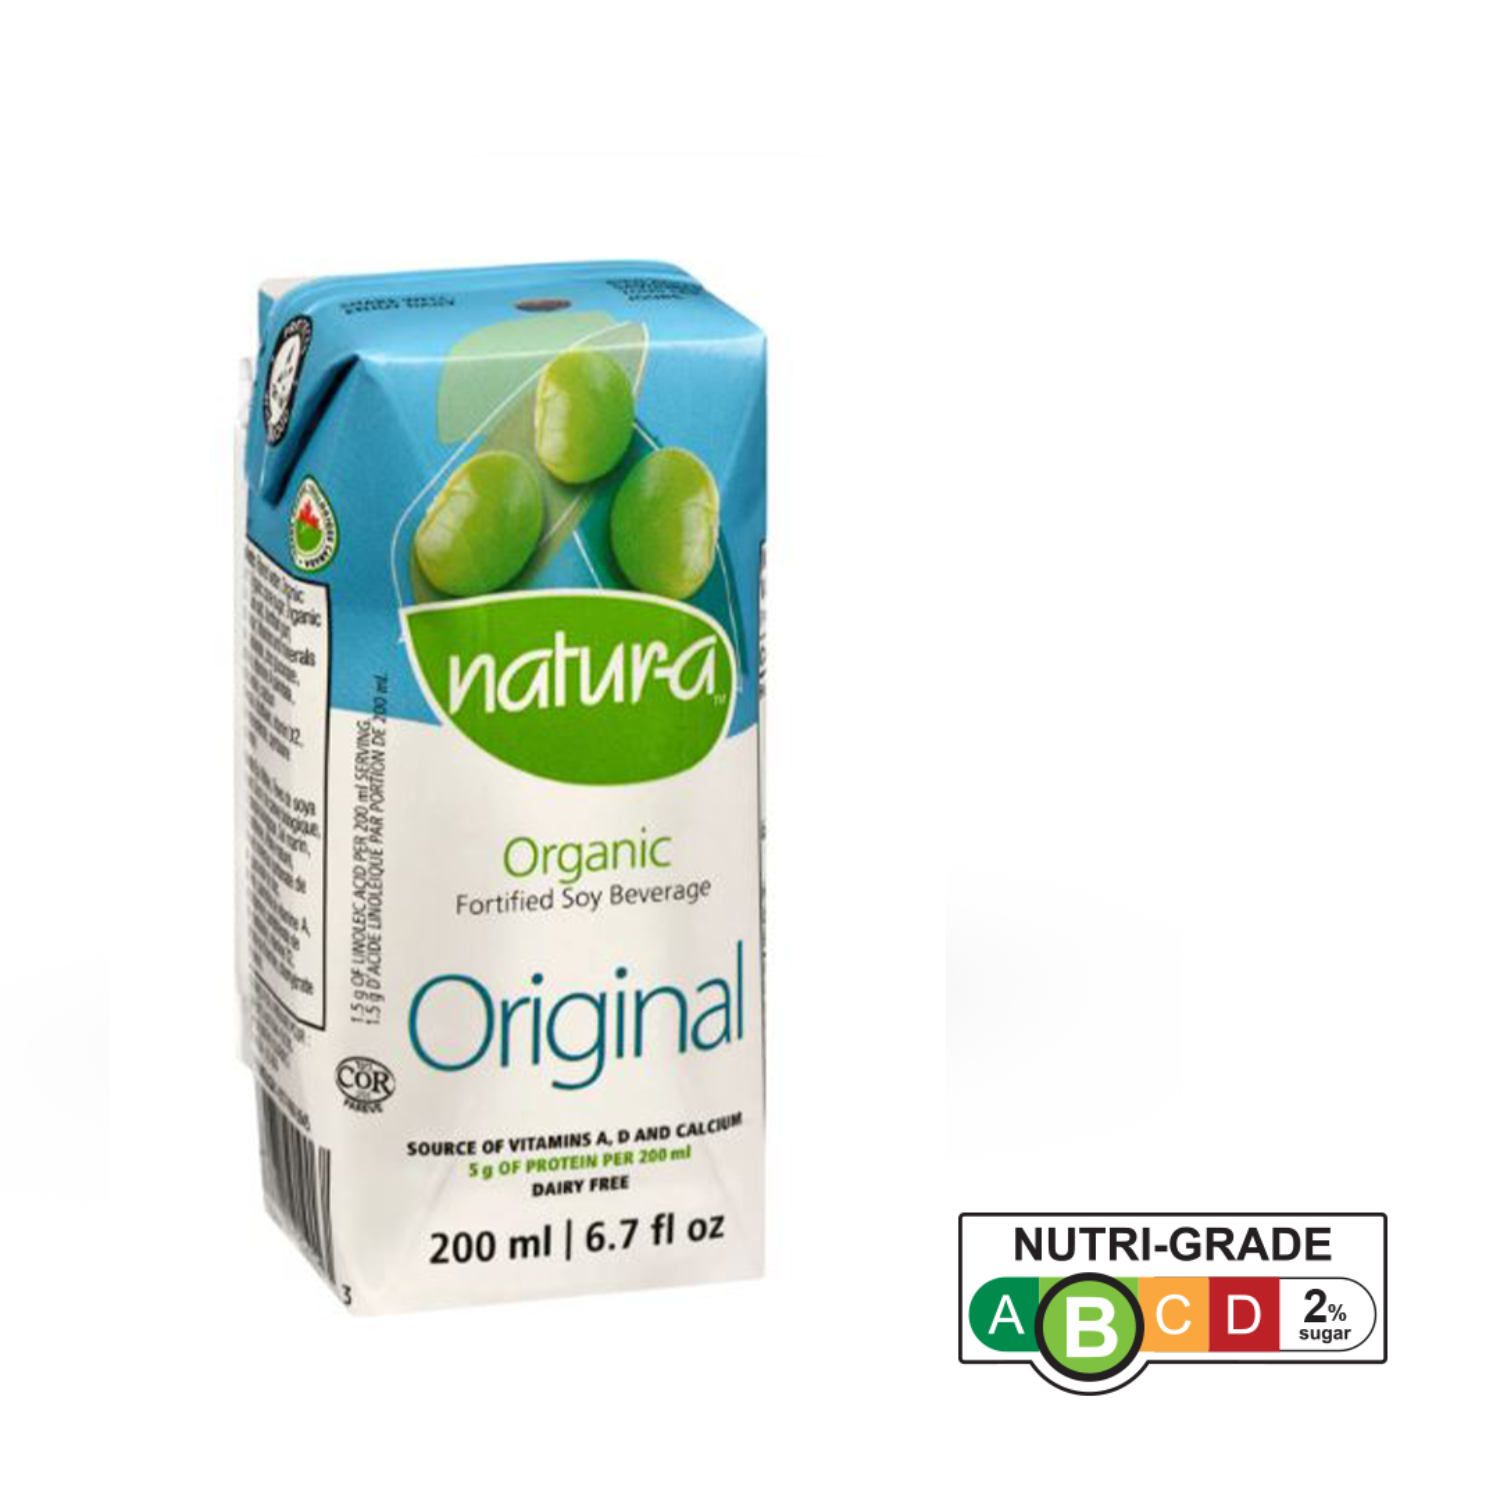 Natur-a Enriched Soy Beverage - Original (Organic), 200 ml.  - Single Pack